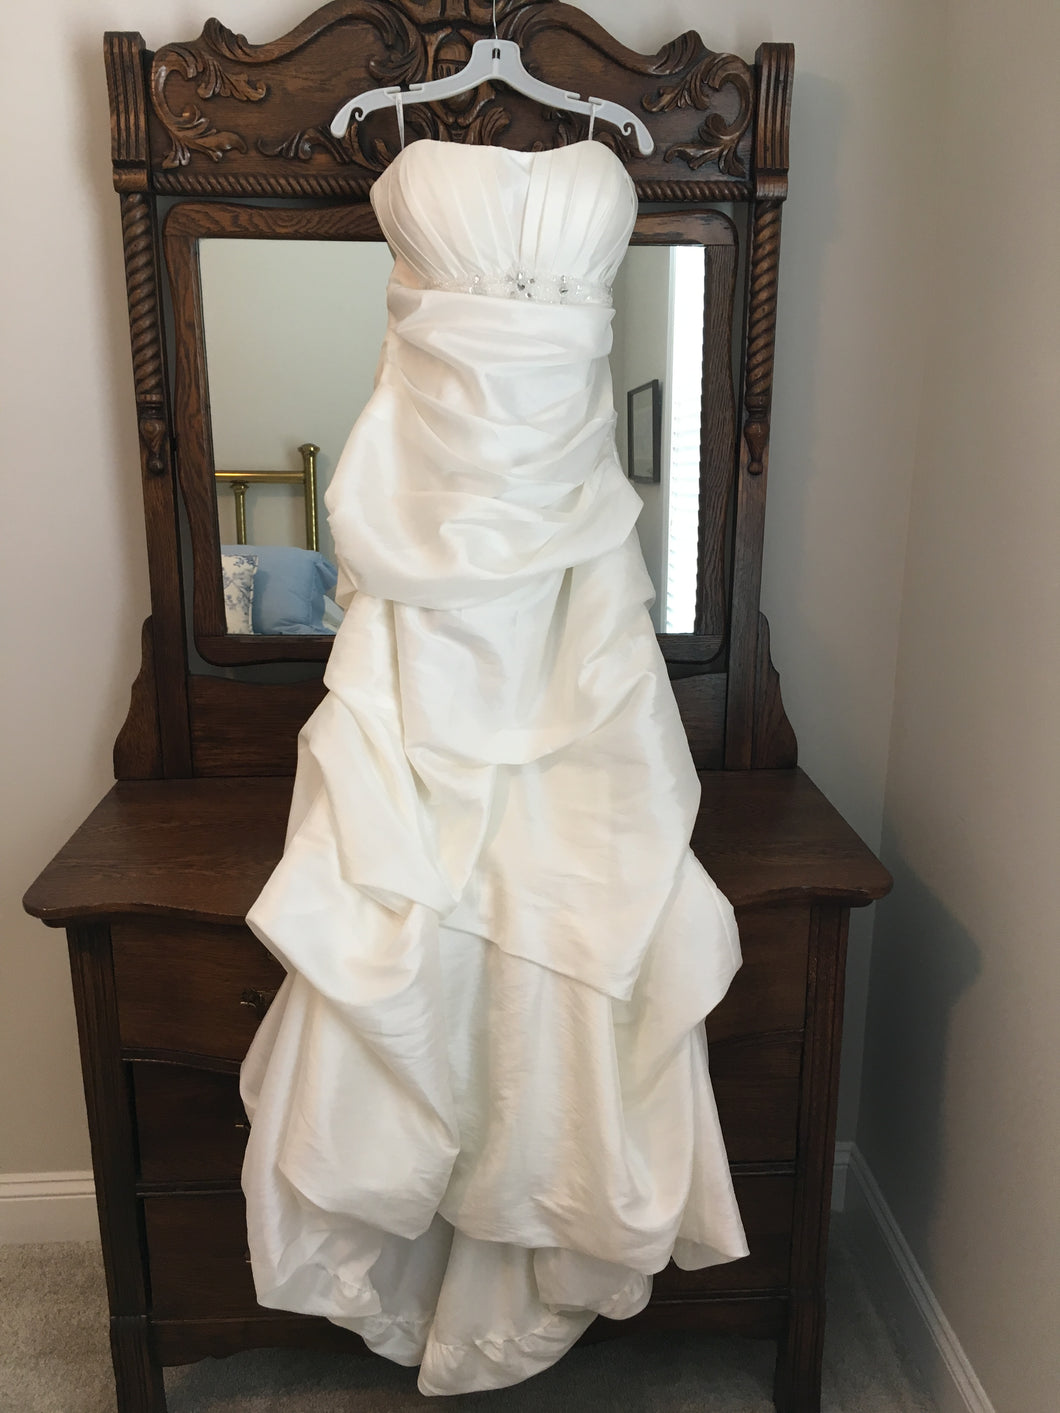 Impression Bridal 'Destiny' size 12 new wedding dress front view on hanger